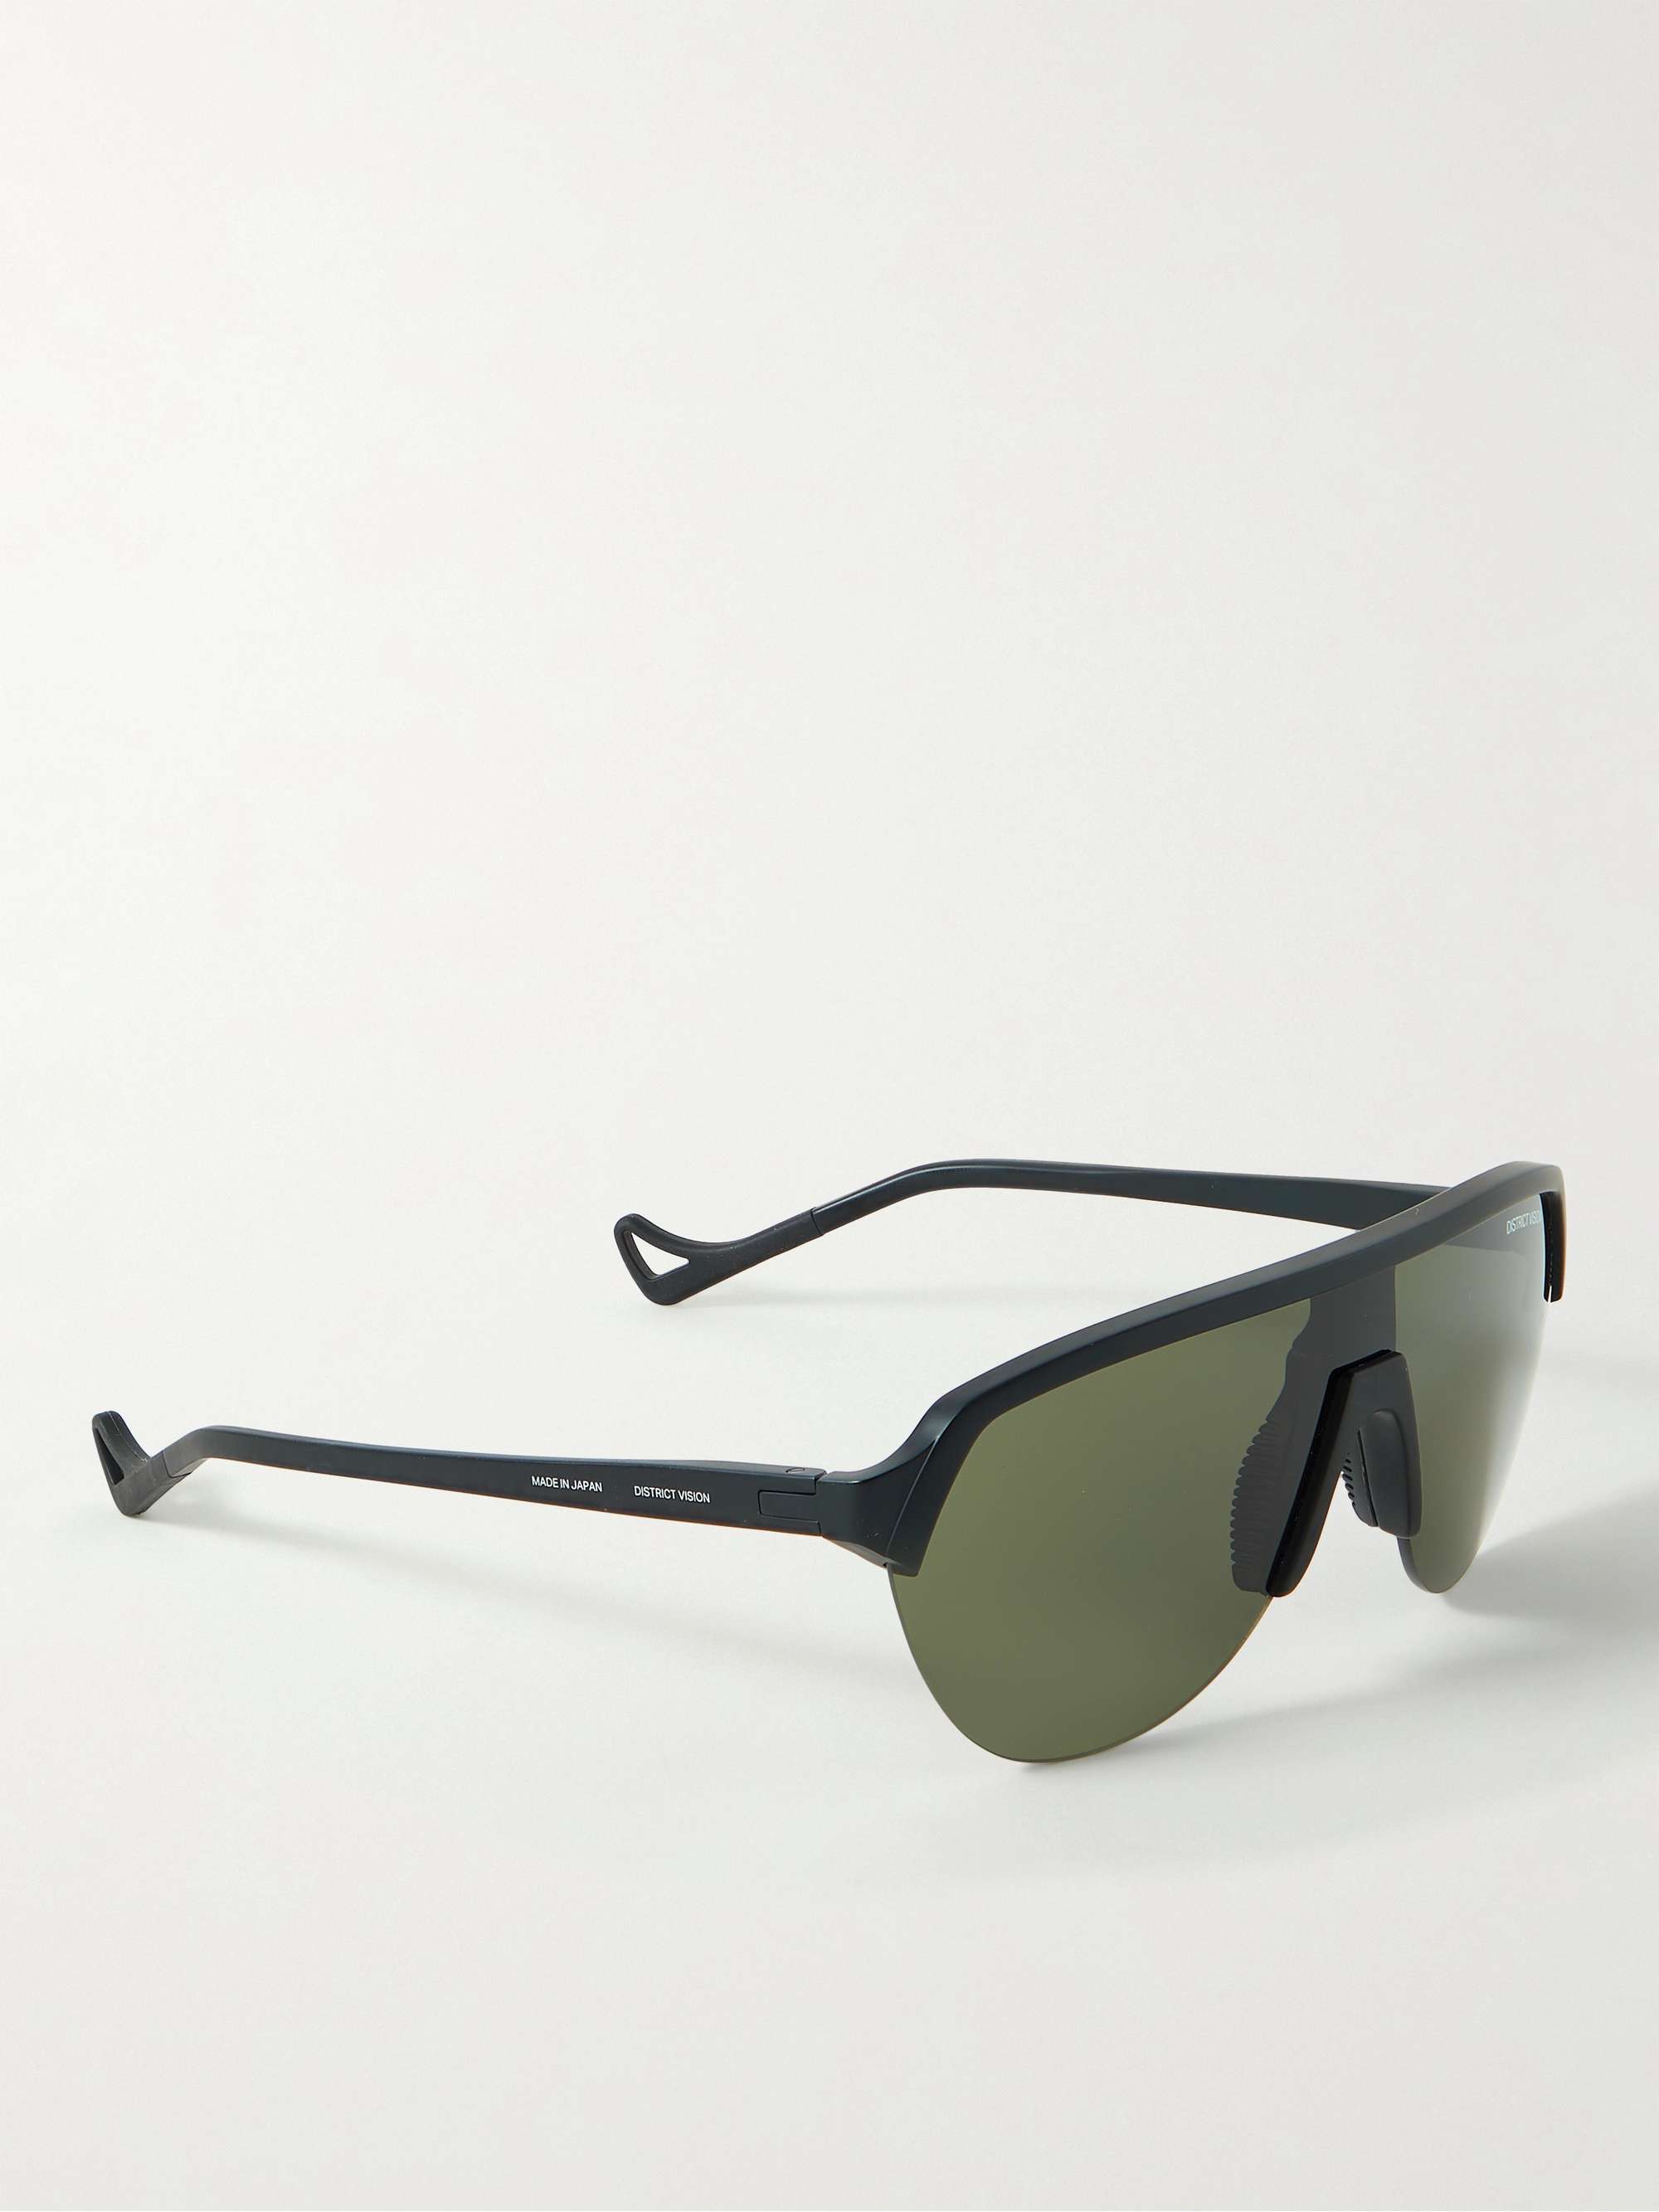 DISTRICT VISION Nagata Speed Blade Nylon and Titanium Sunglasses